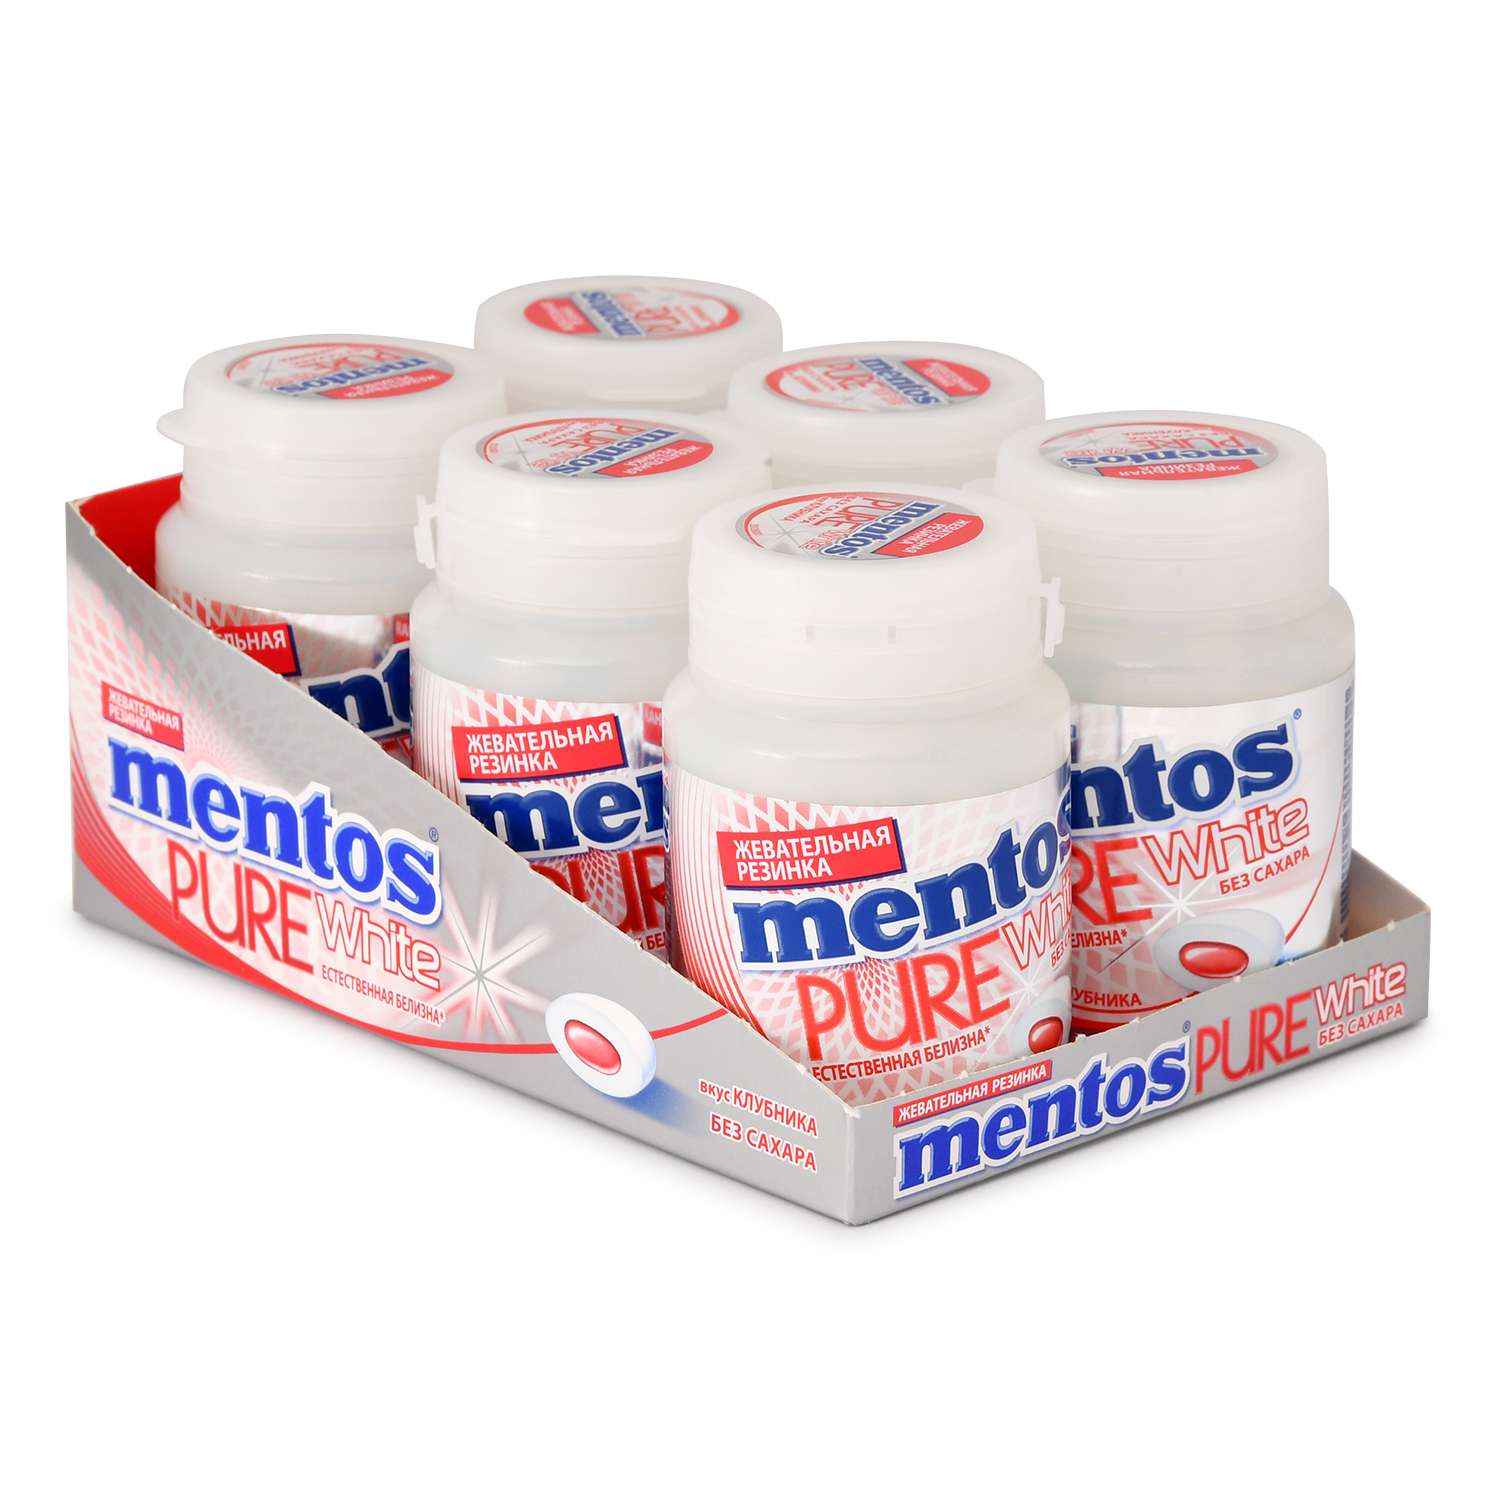 Резинка жевательная Ментос Pure White со вкусом клубники 45г - фото 2